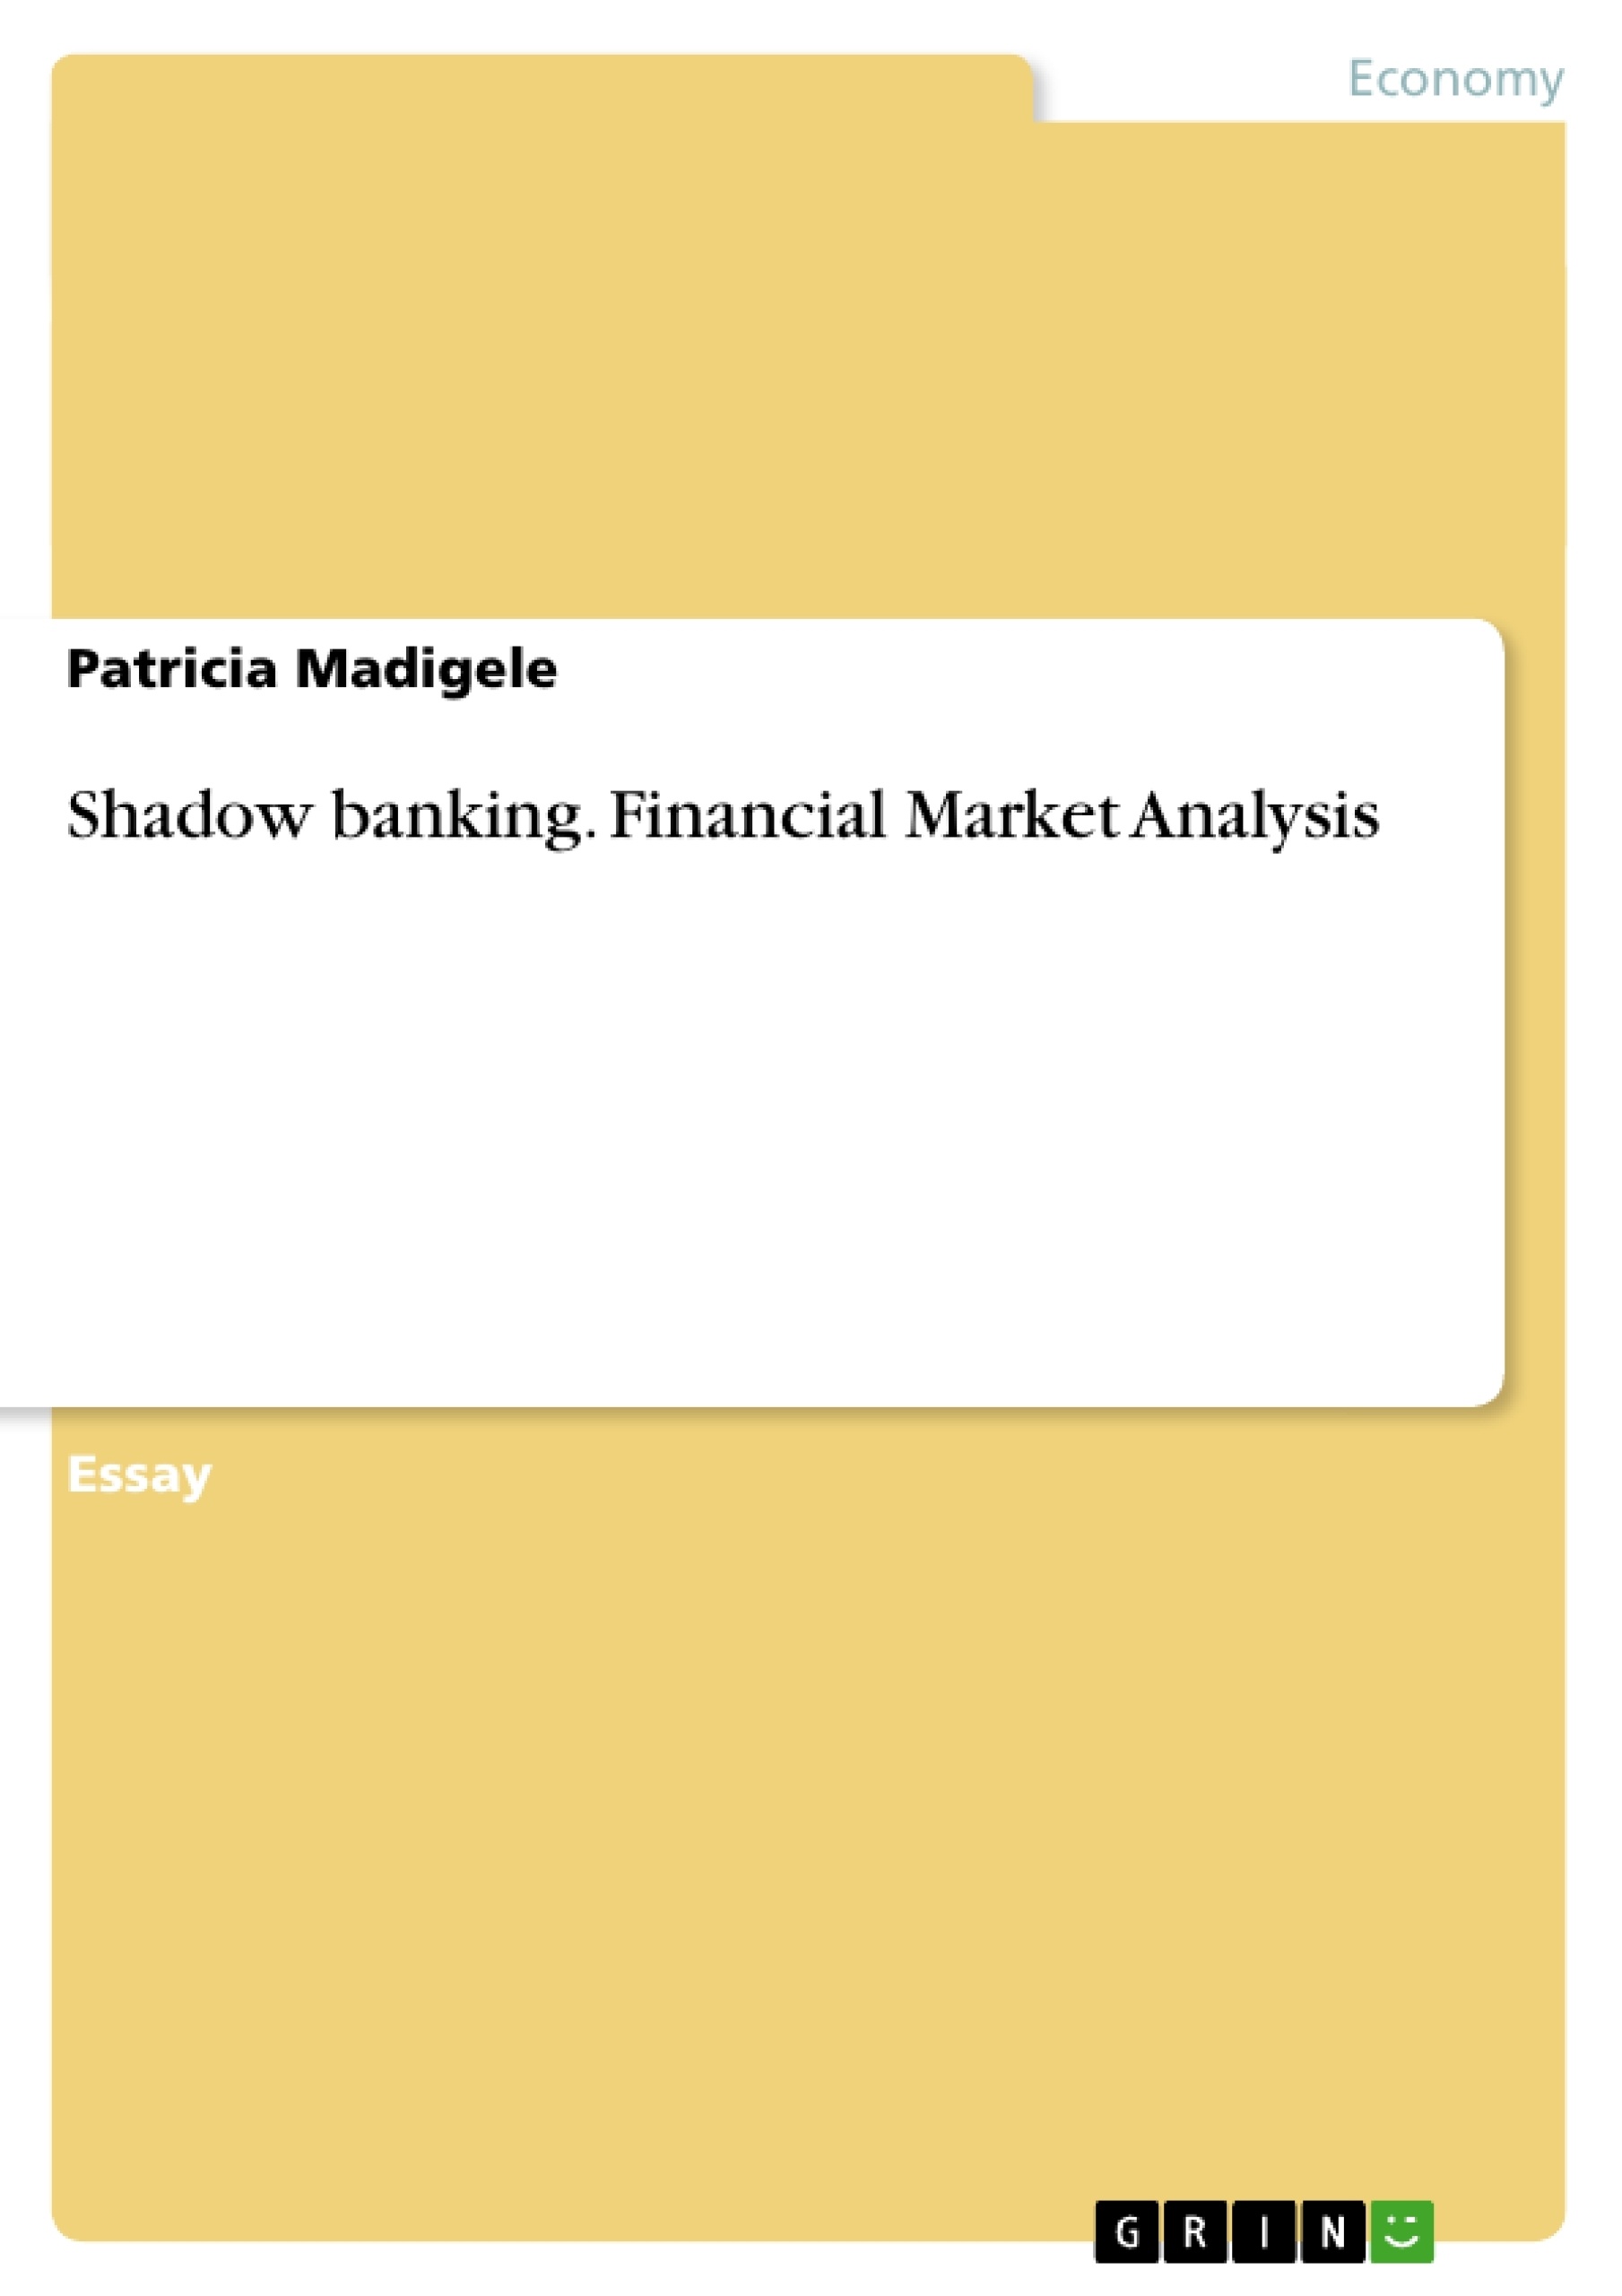 Title: Shadow banking. Financial Market Analysis